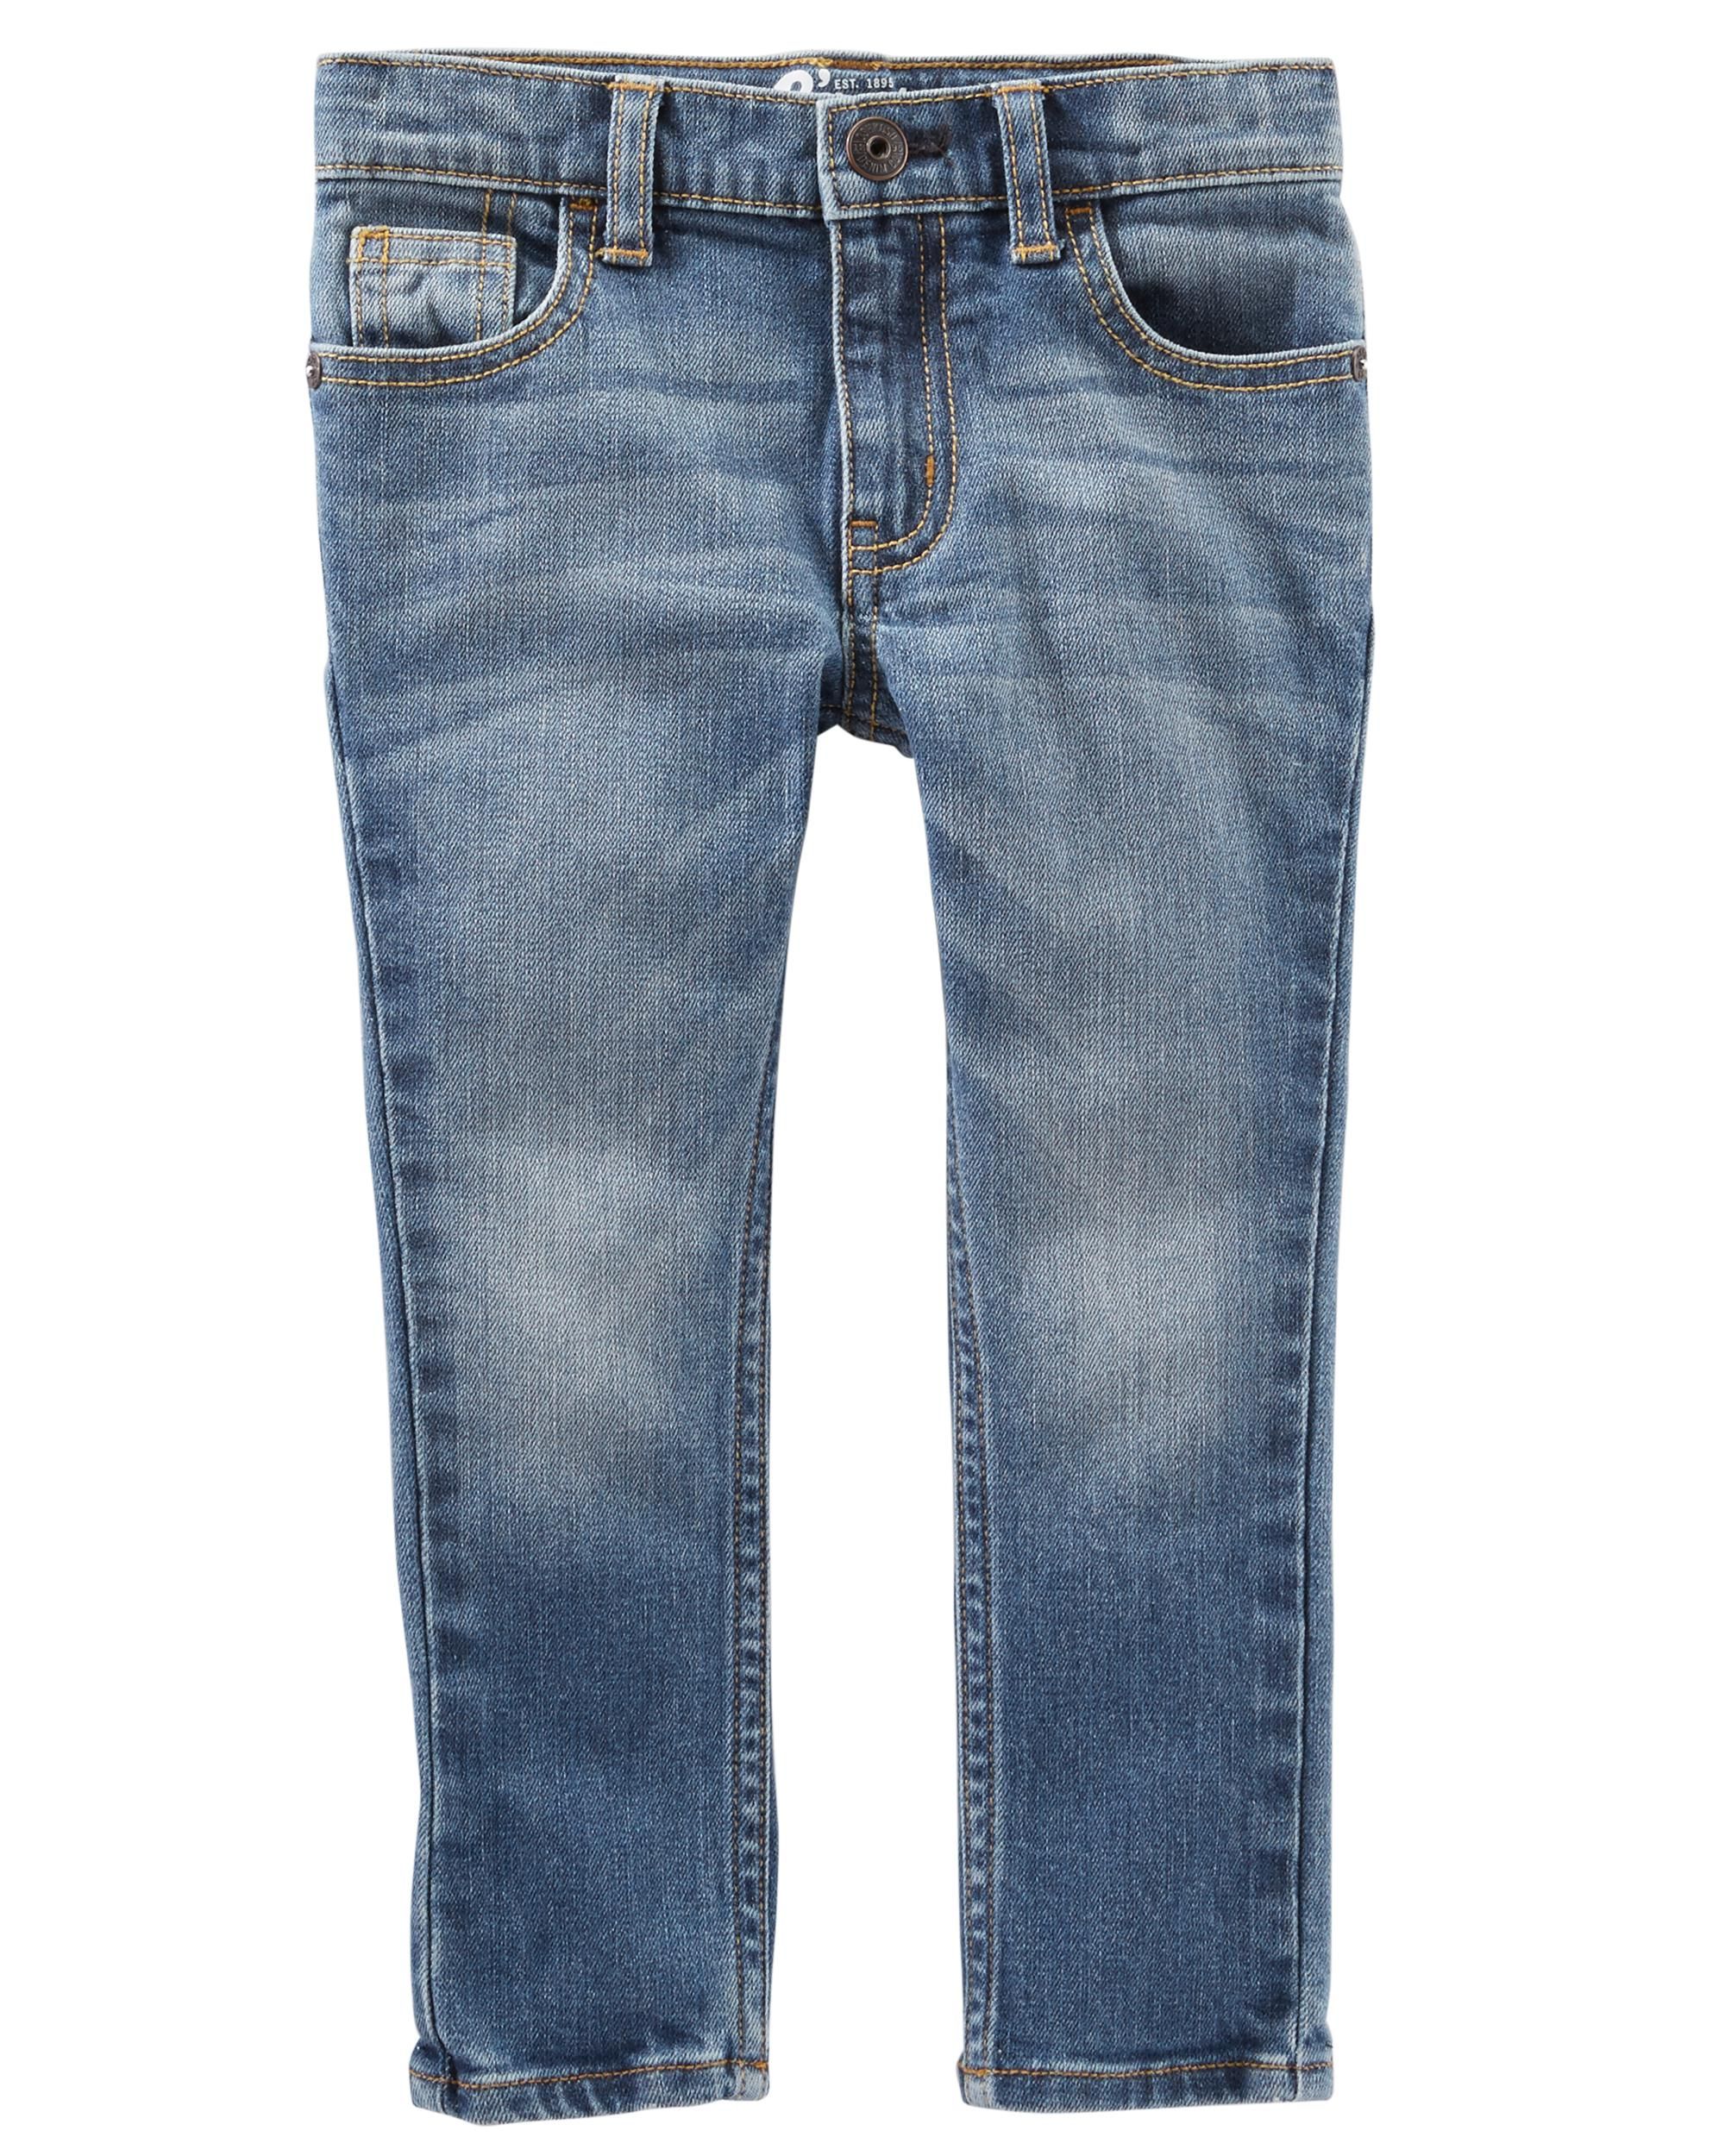 Skinny Jeans - Indigo Bright Wash | Carter's